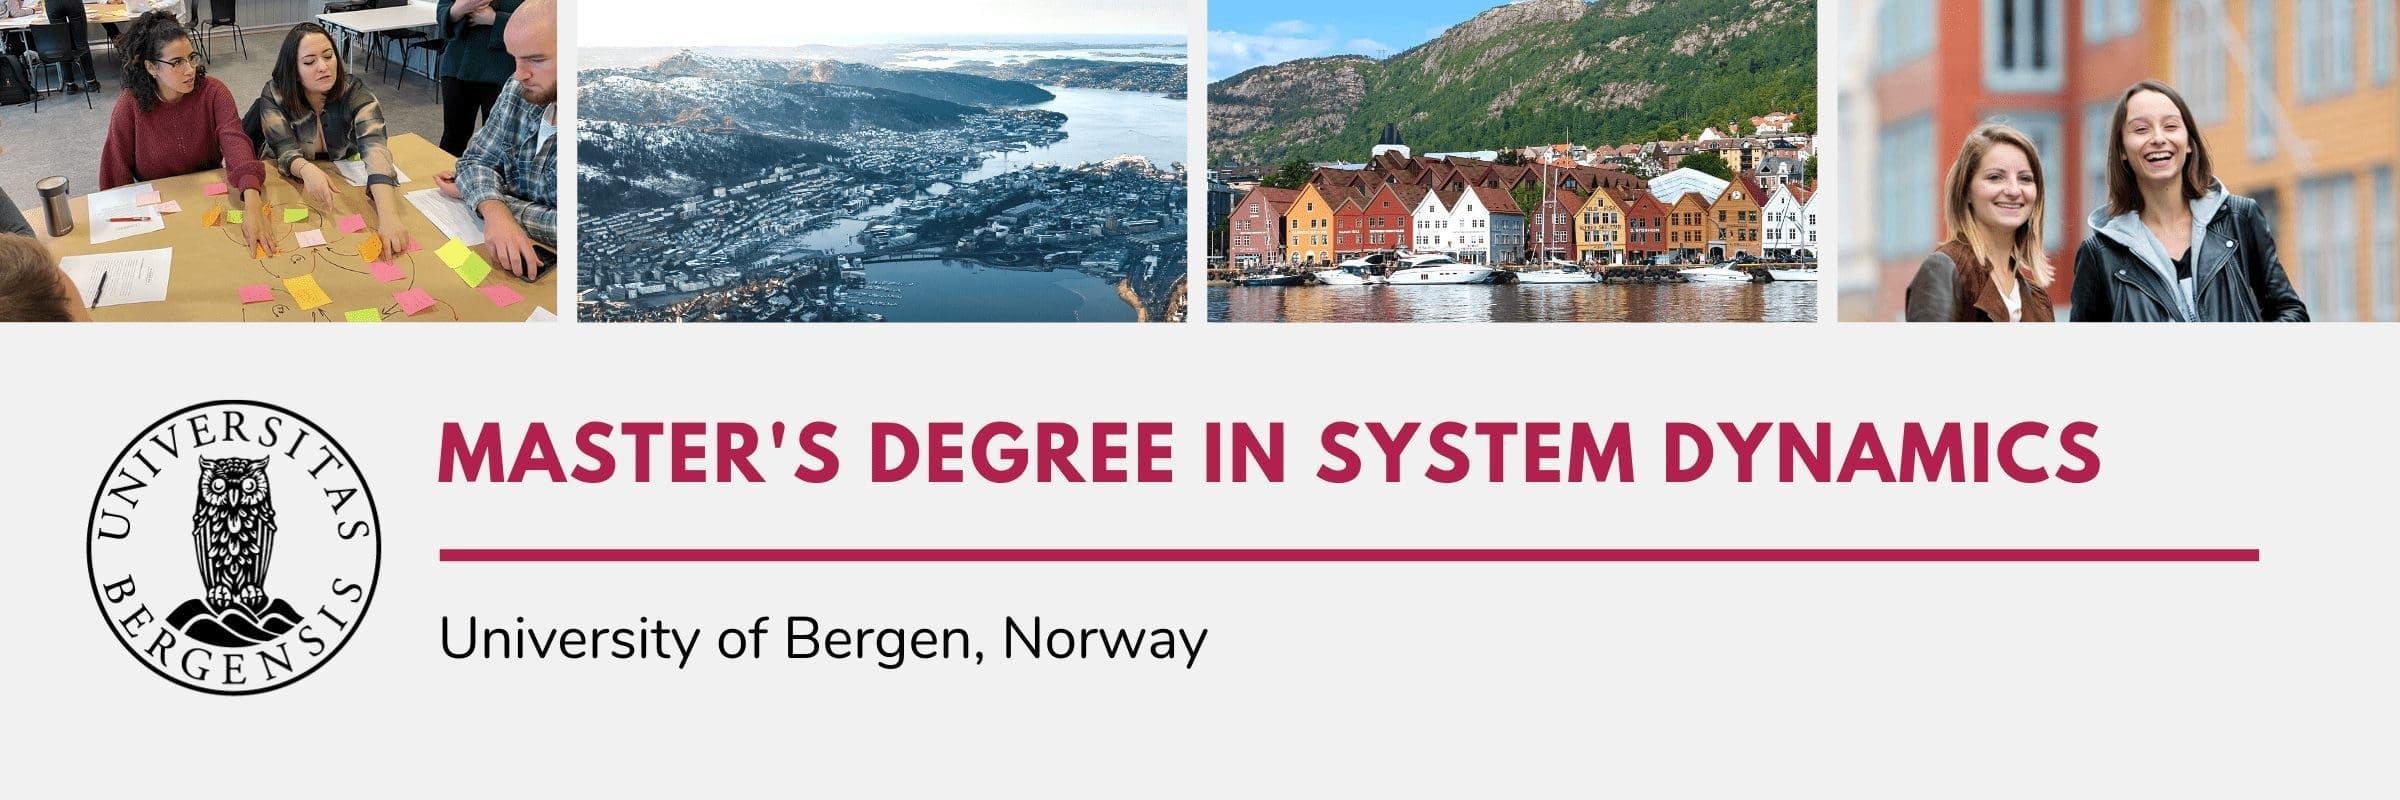 Master Degree in System Dynamics University of Bergen